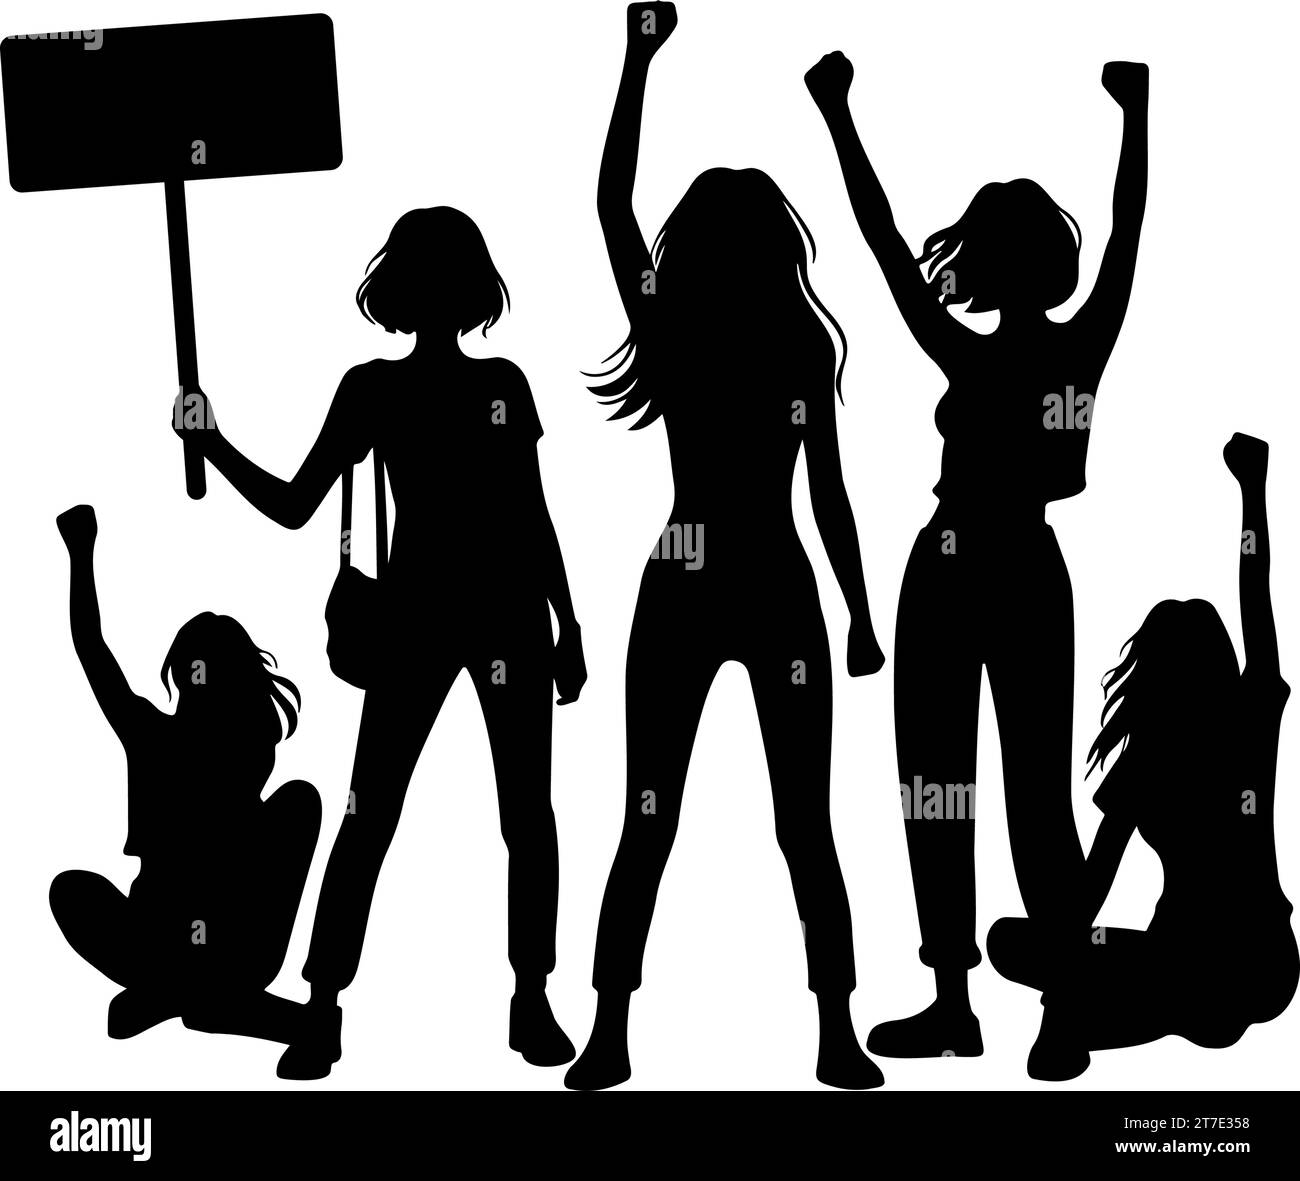 Gruppe von Demonstrantinnen oder Aktivistin-Silhouette. Vektorabbildung Stock Vektor